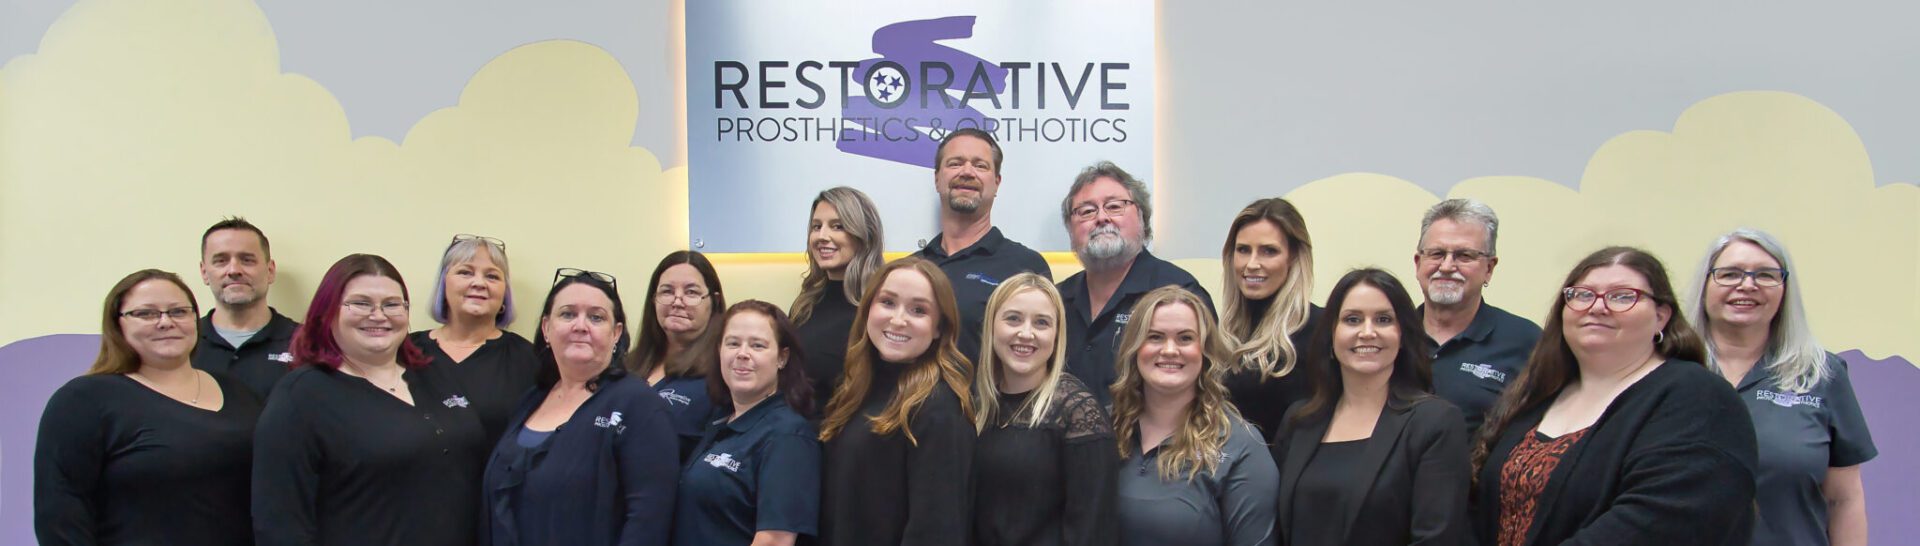 Restorative Prosthetics and Orthotics Team